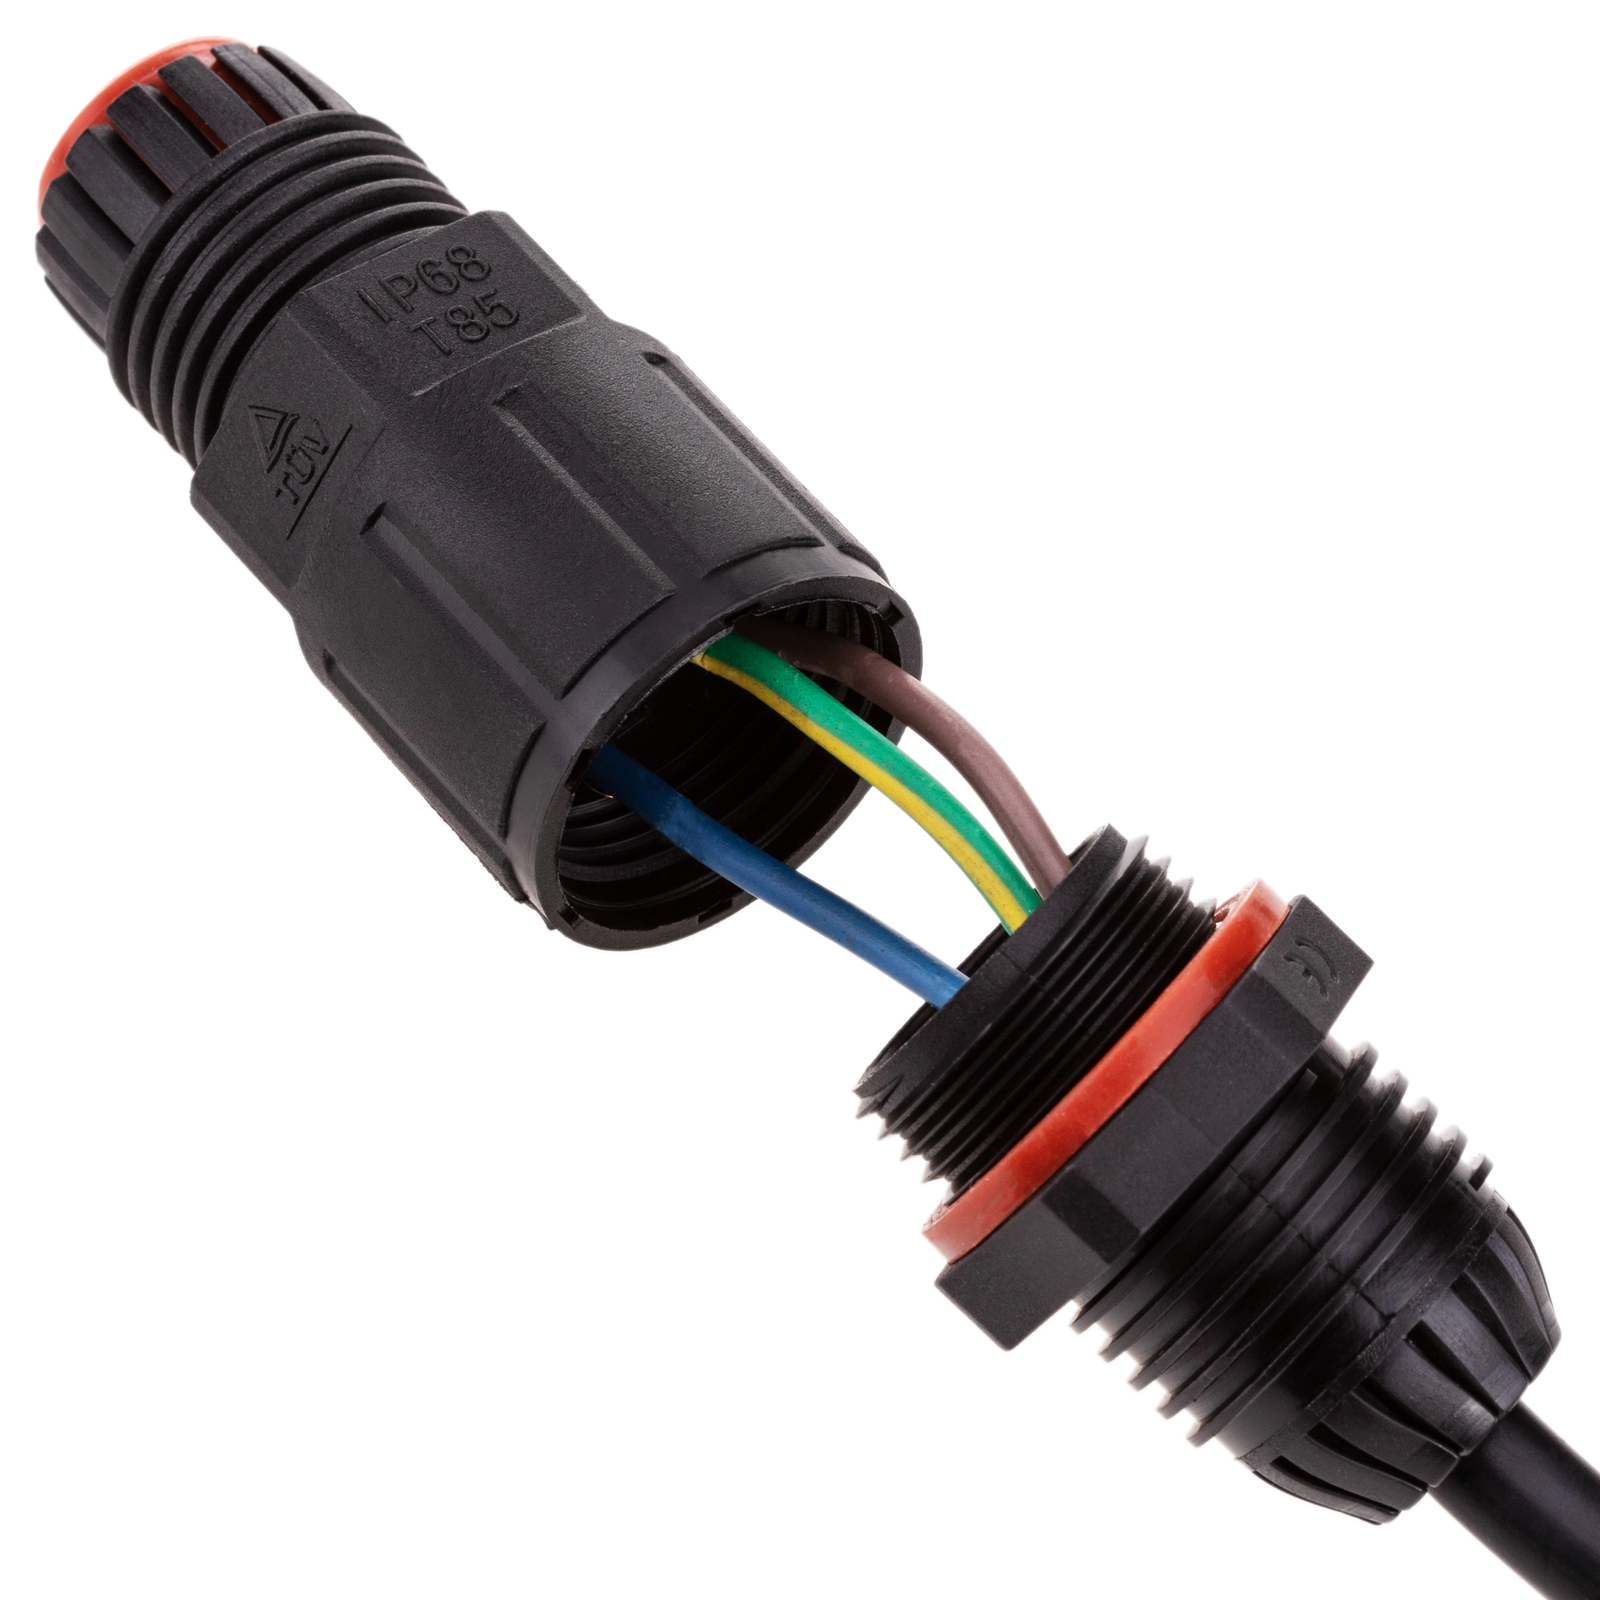 IP68 gel cable connectors